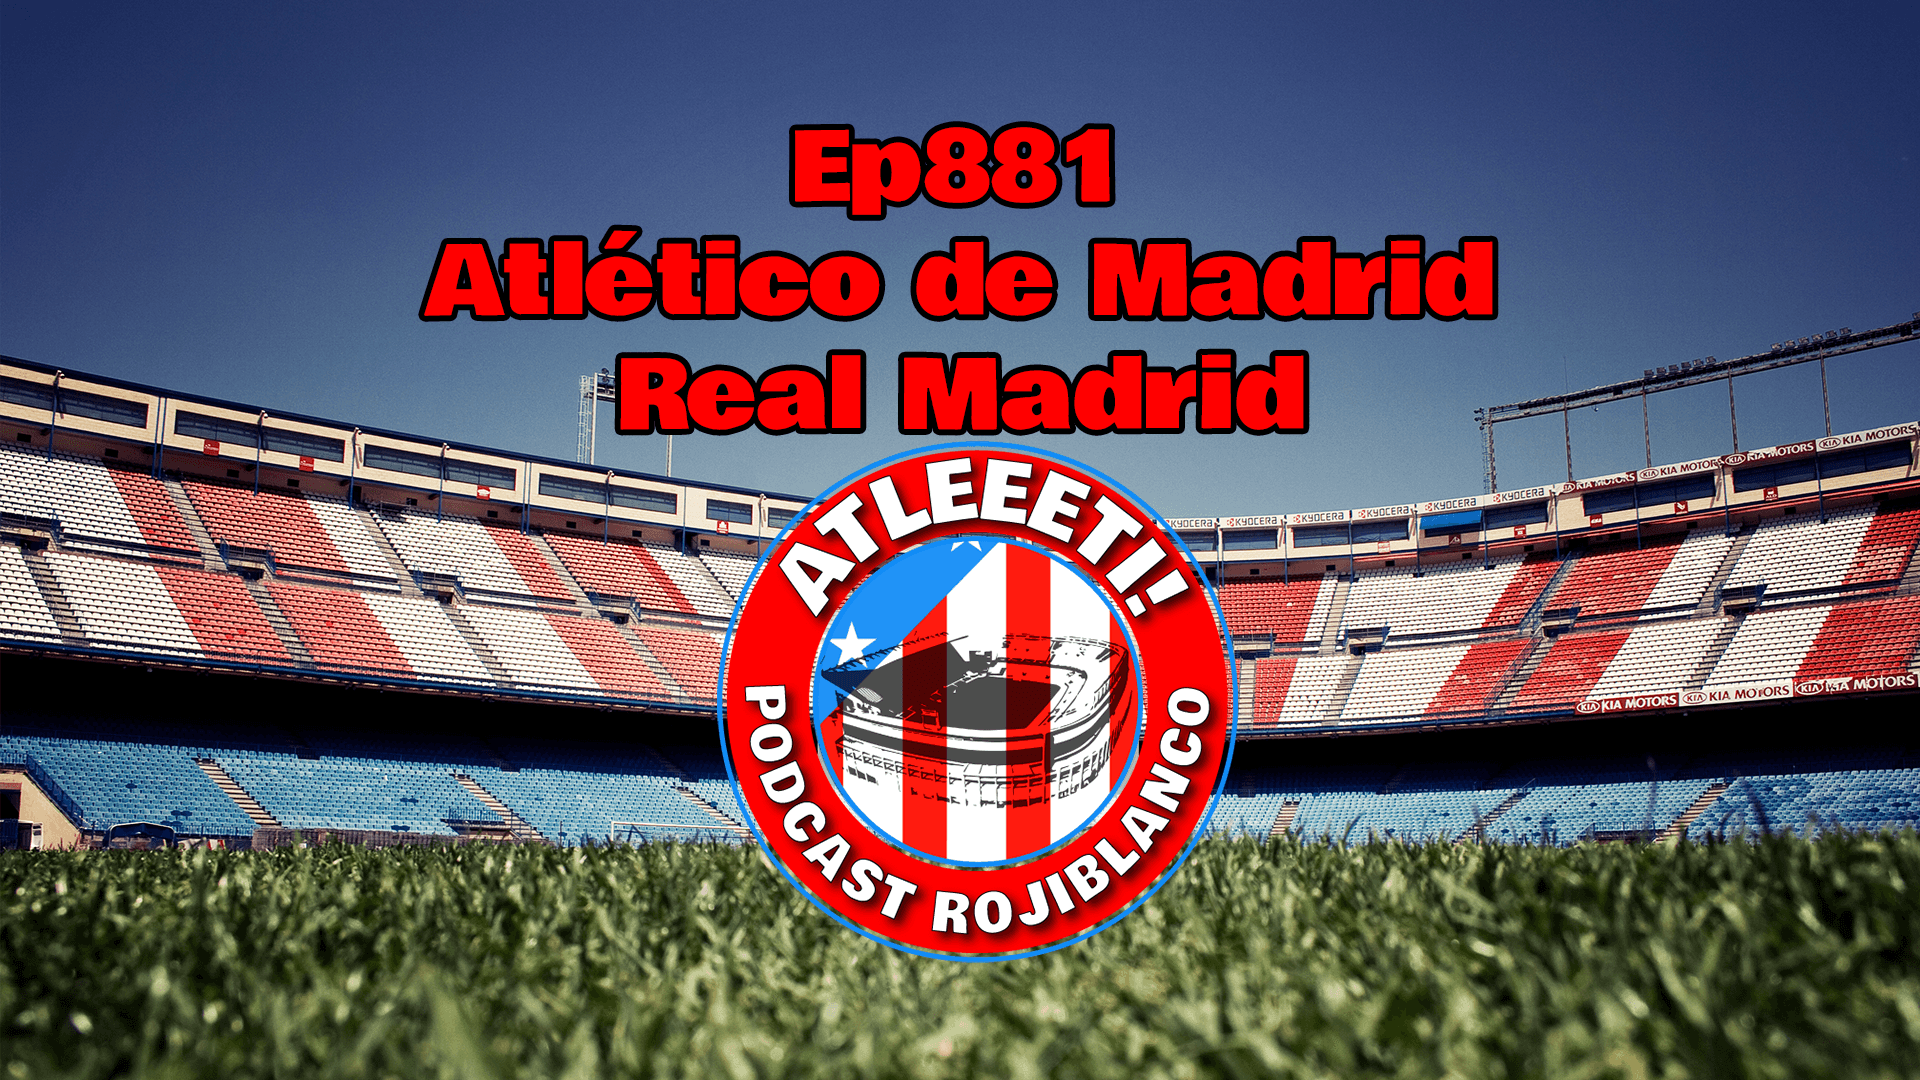 Ep881: Atlético de Madrid 3-1 Real Madrid